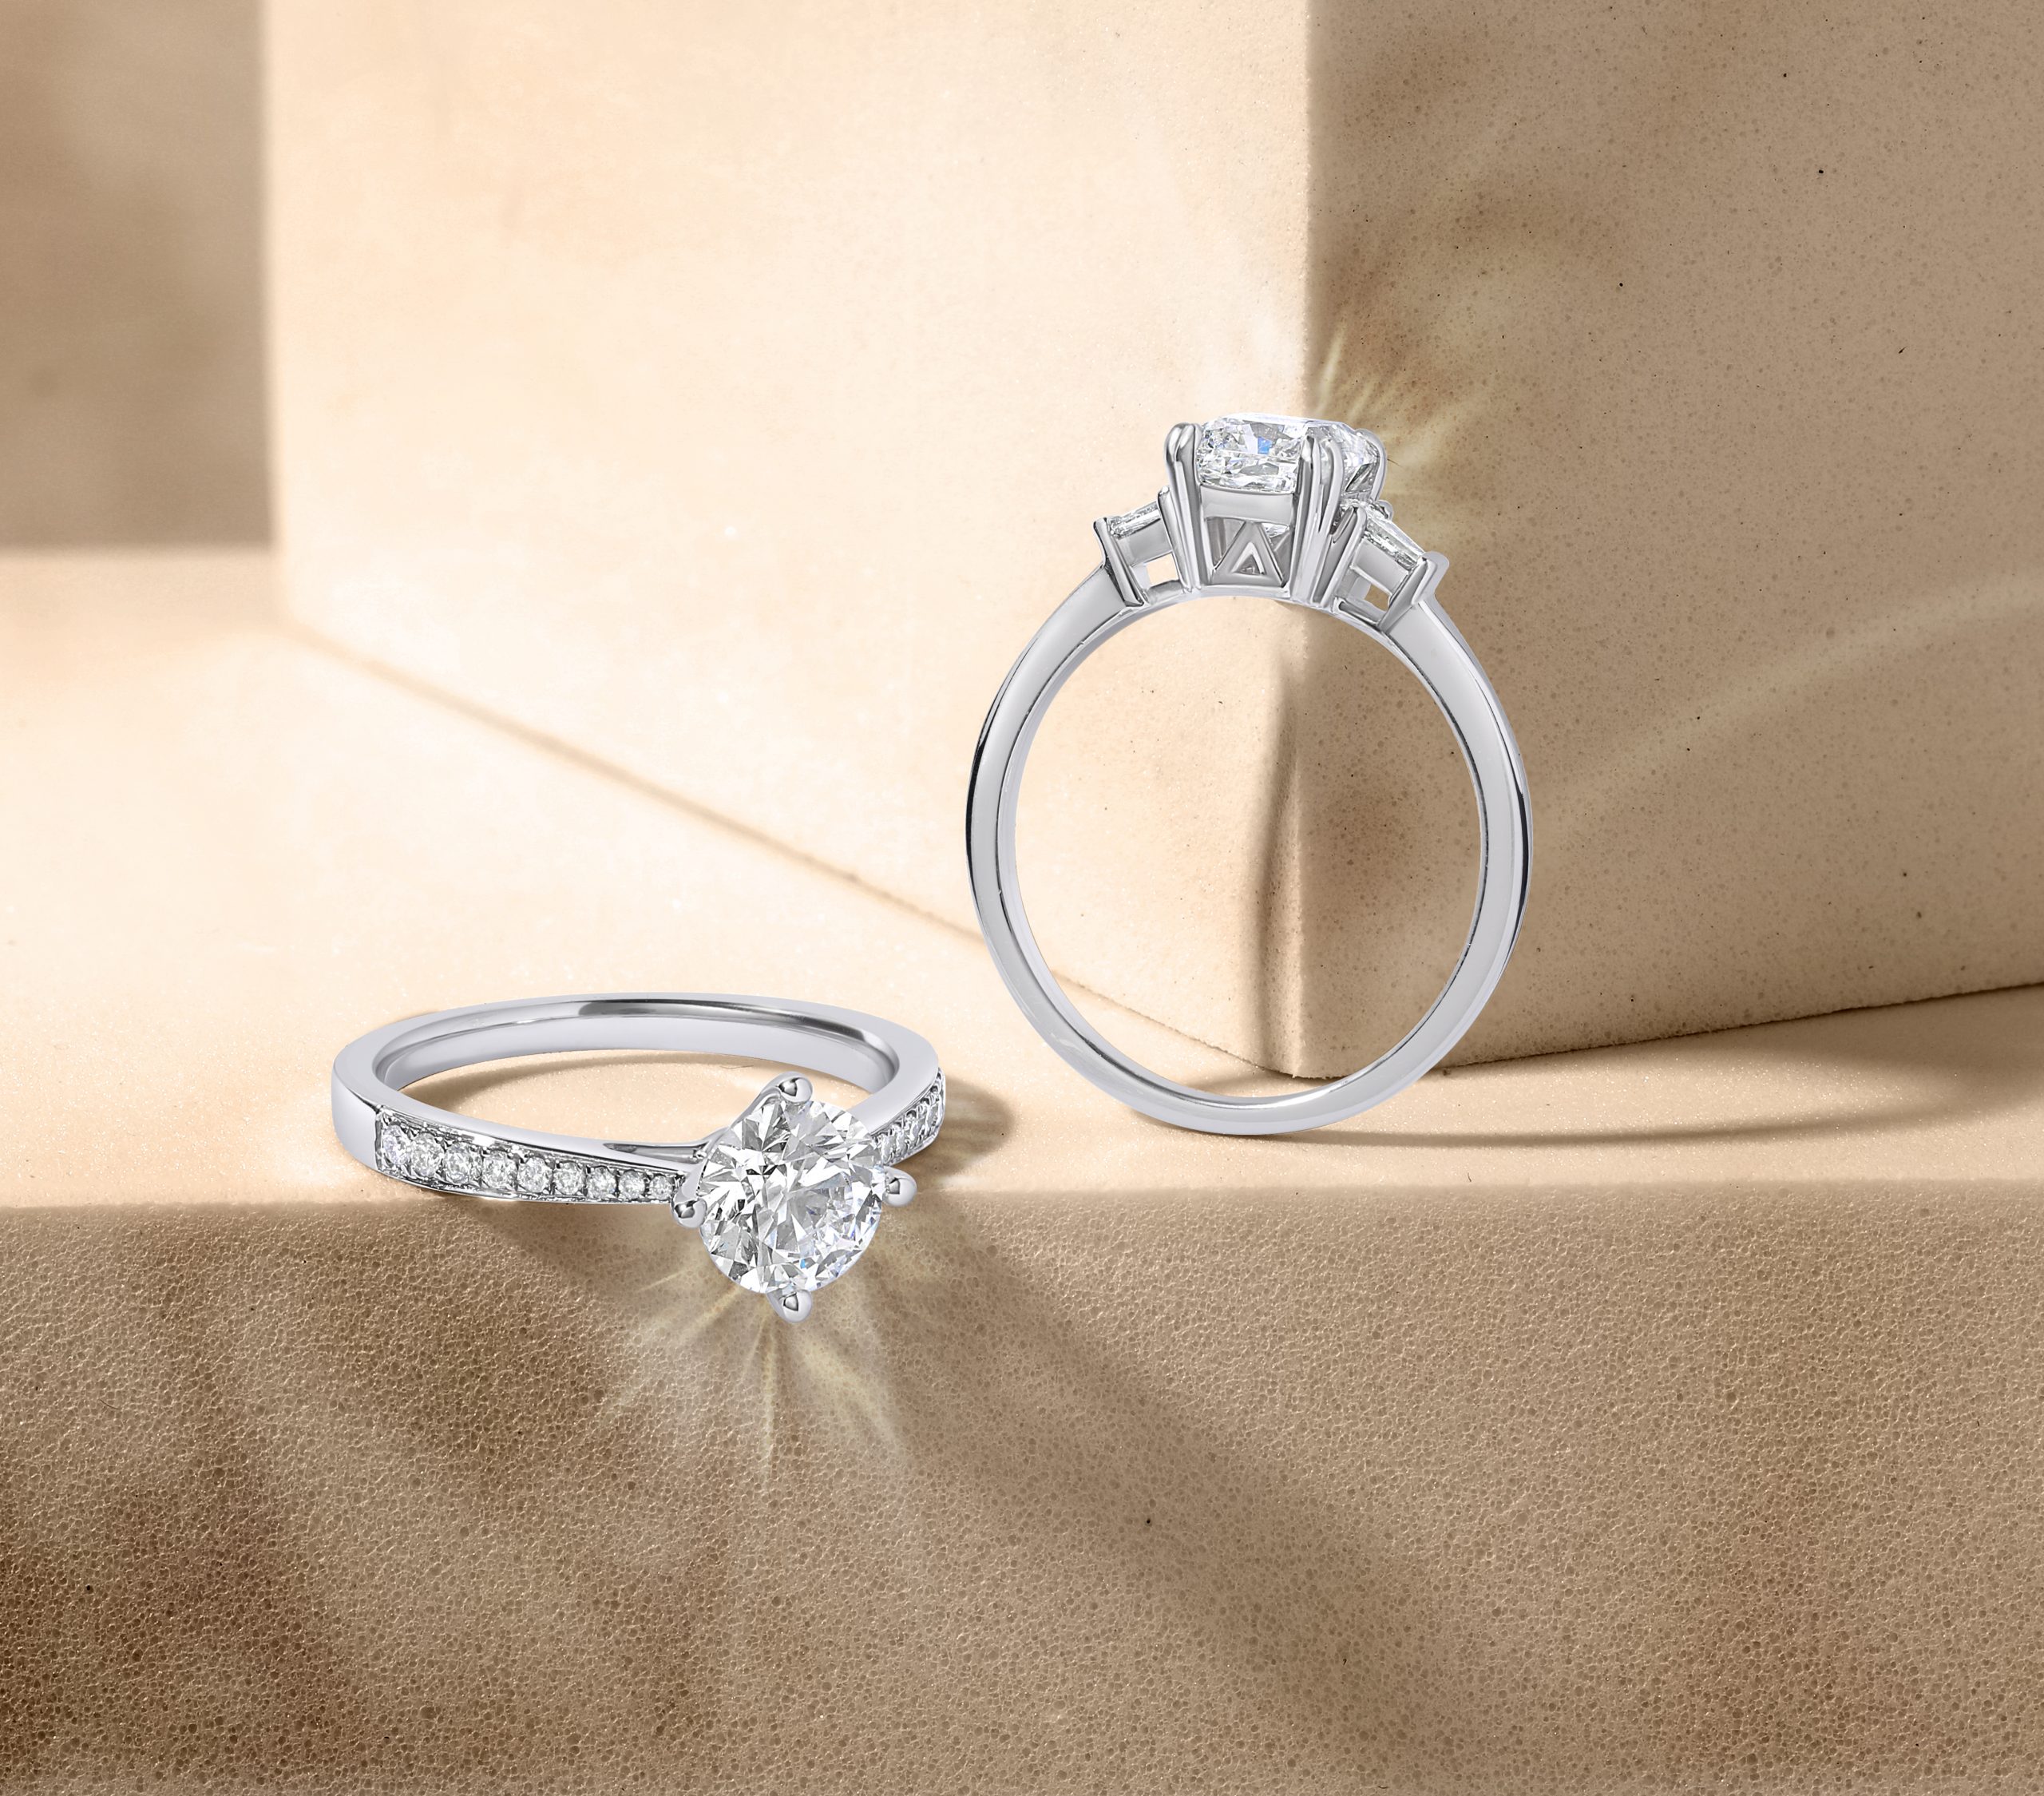 3 Carat Diamond Rings: The Essential Buying Guide | Ritani